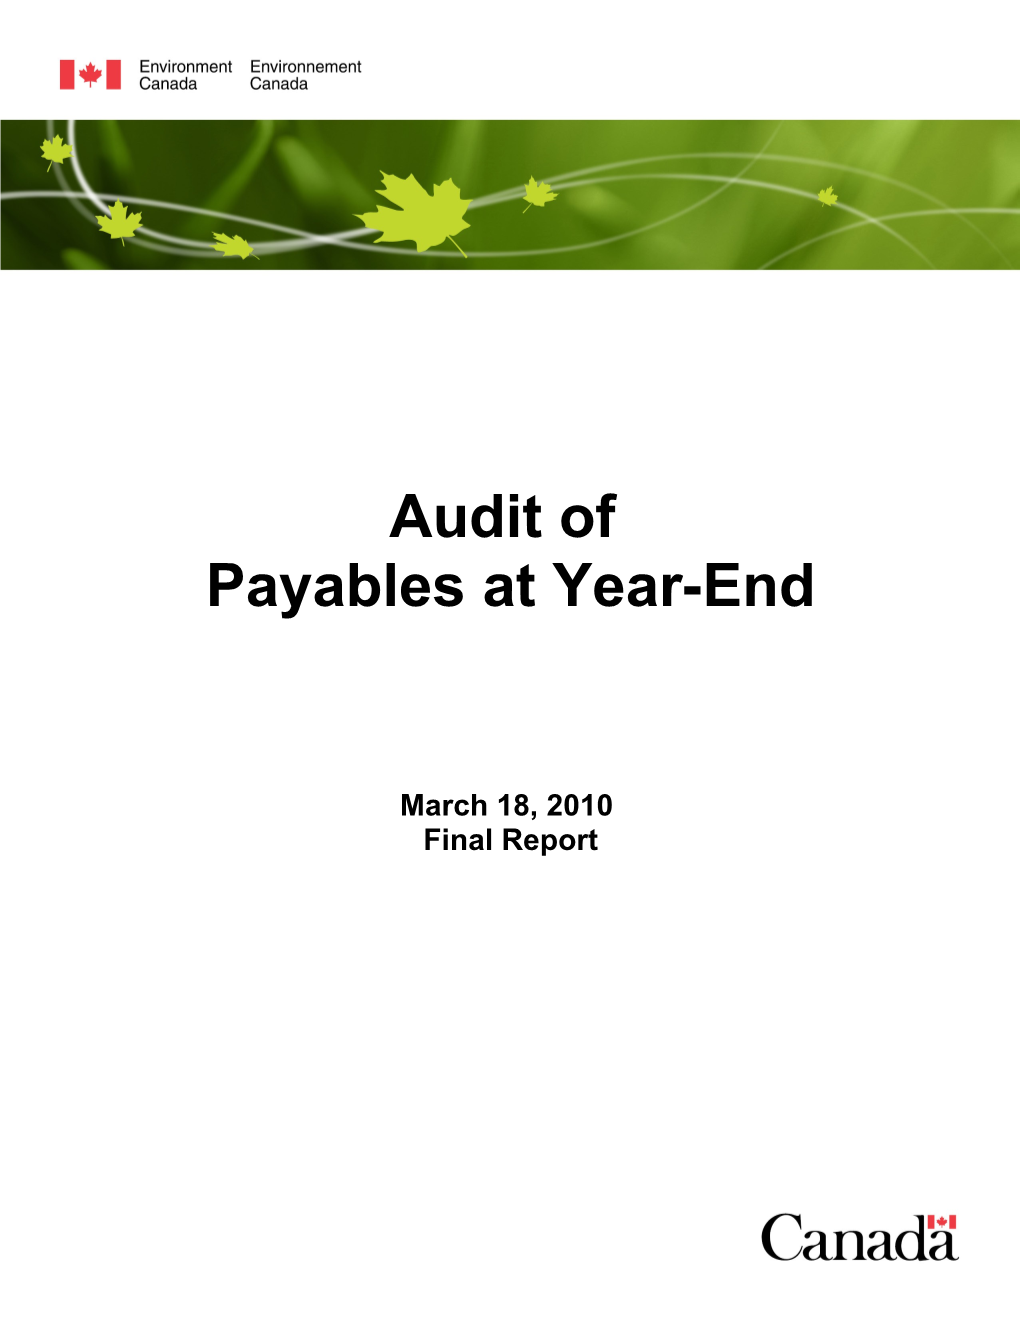 PAYE - Final Report